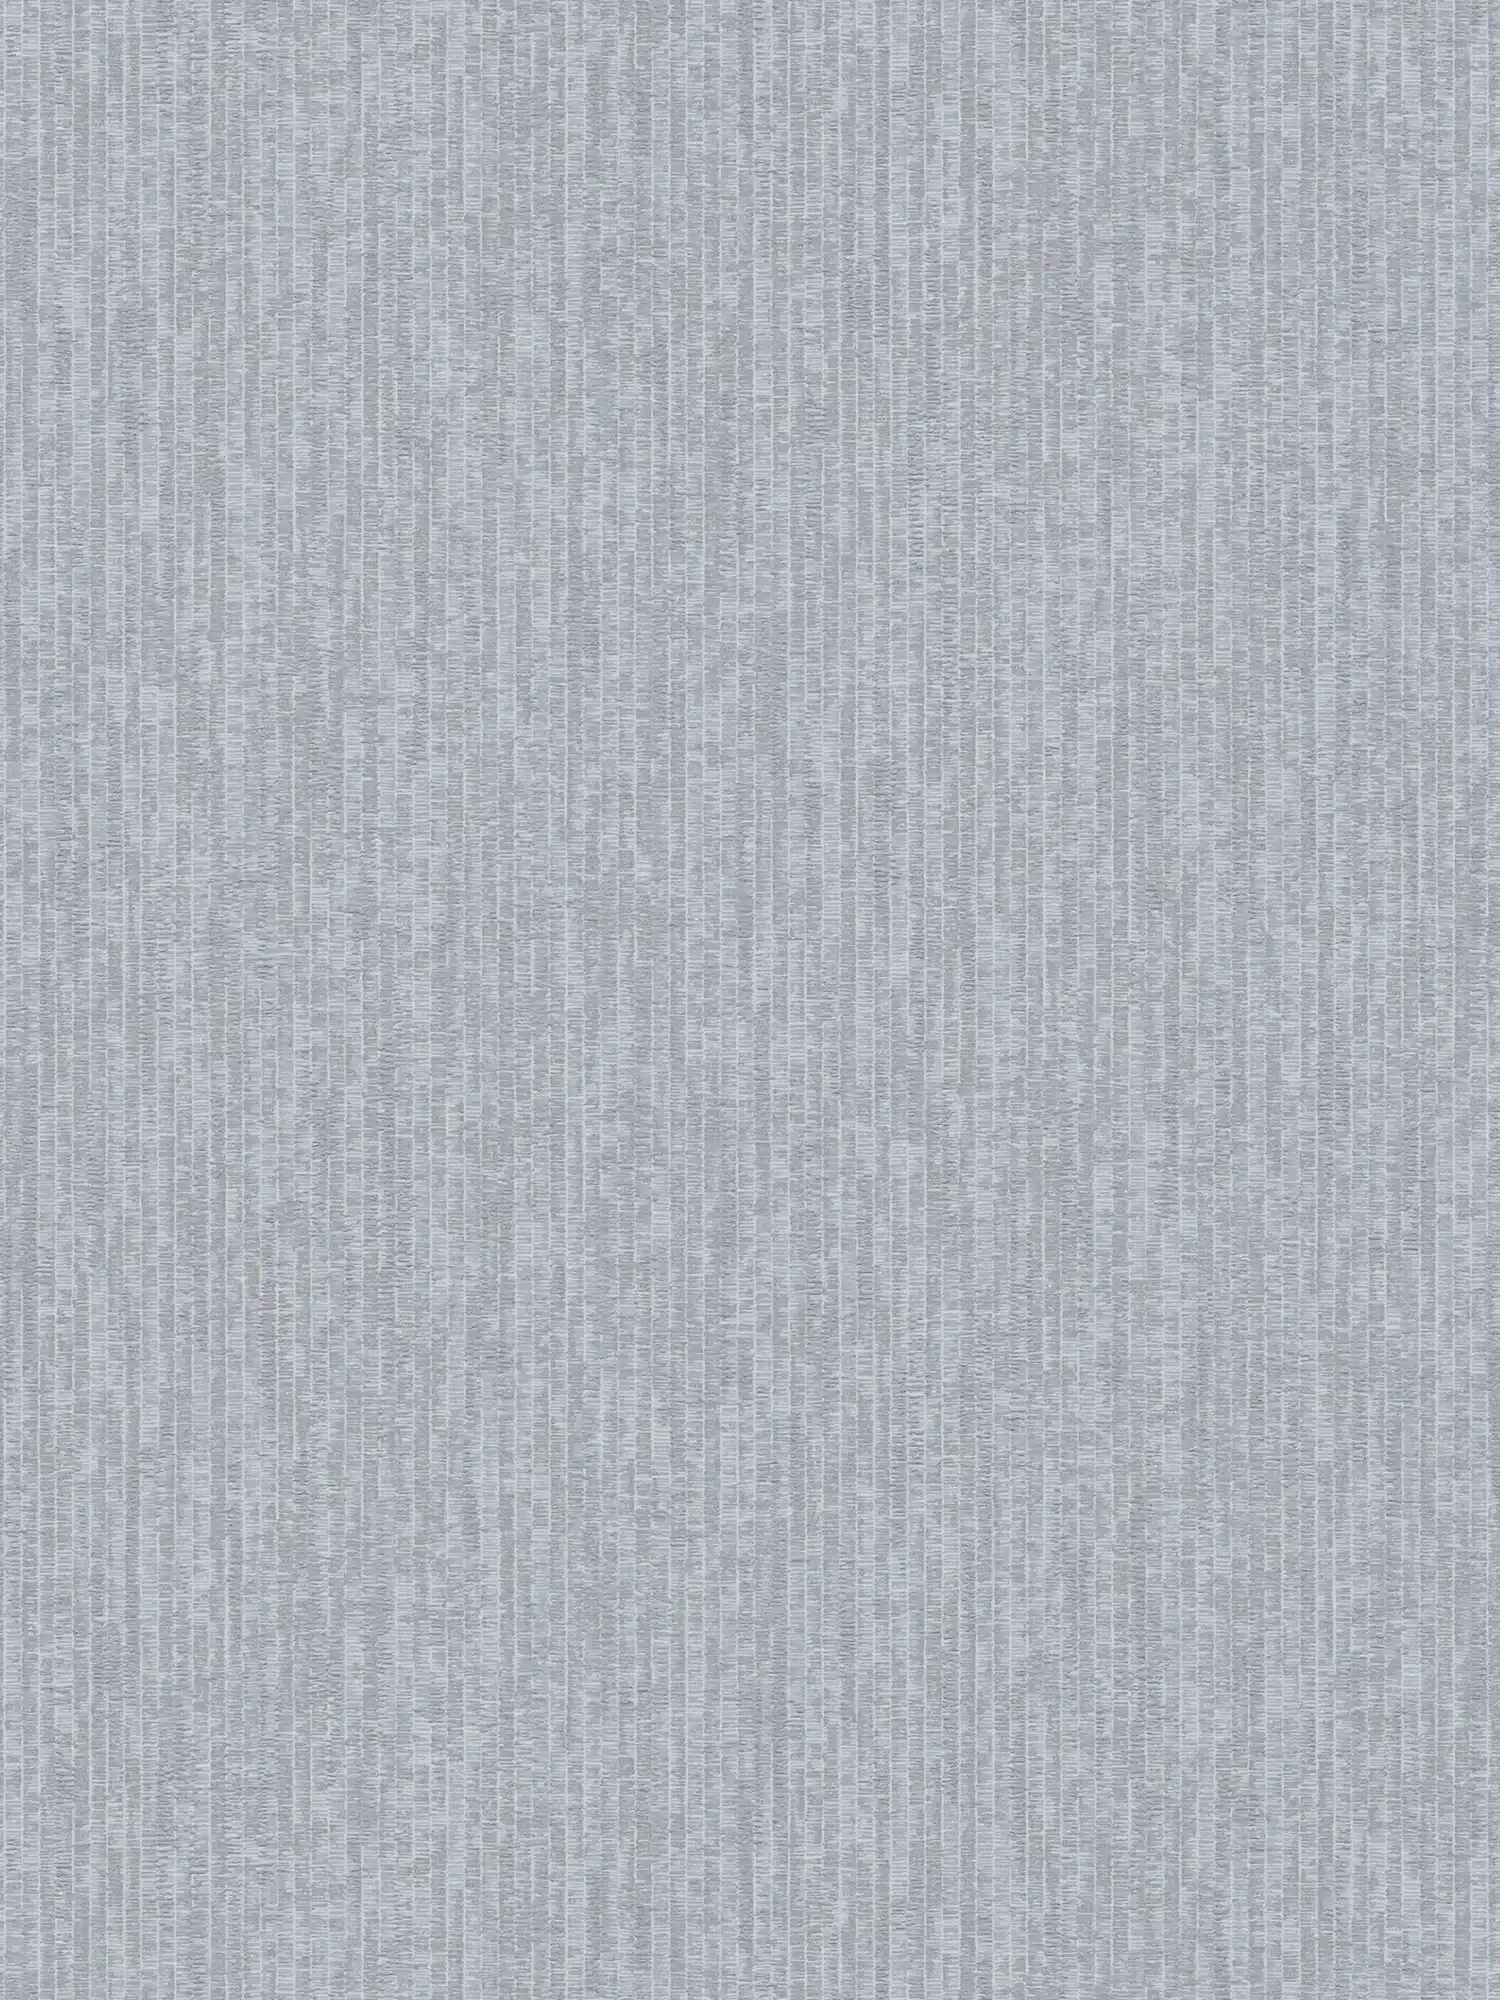             Blau melierte Tapete mit metallic Gewebeoptik – Blau, Grau
        